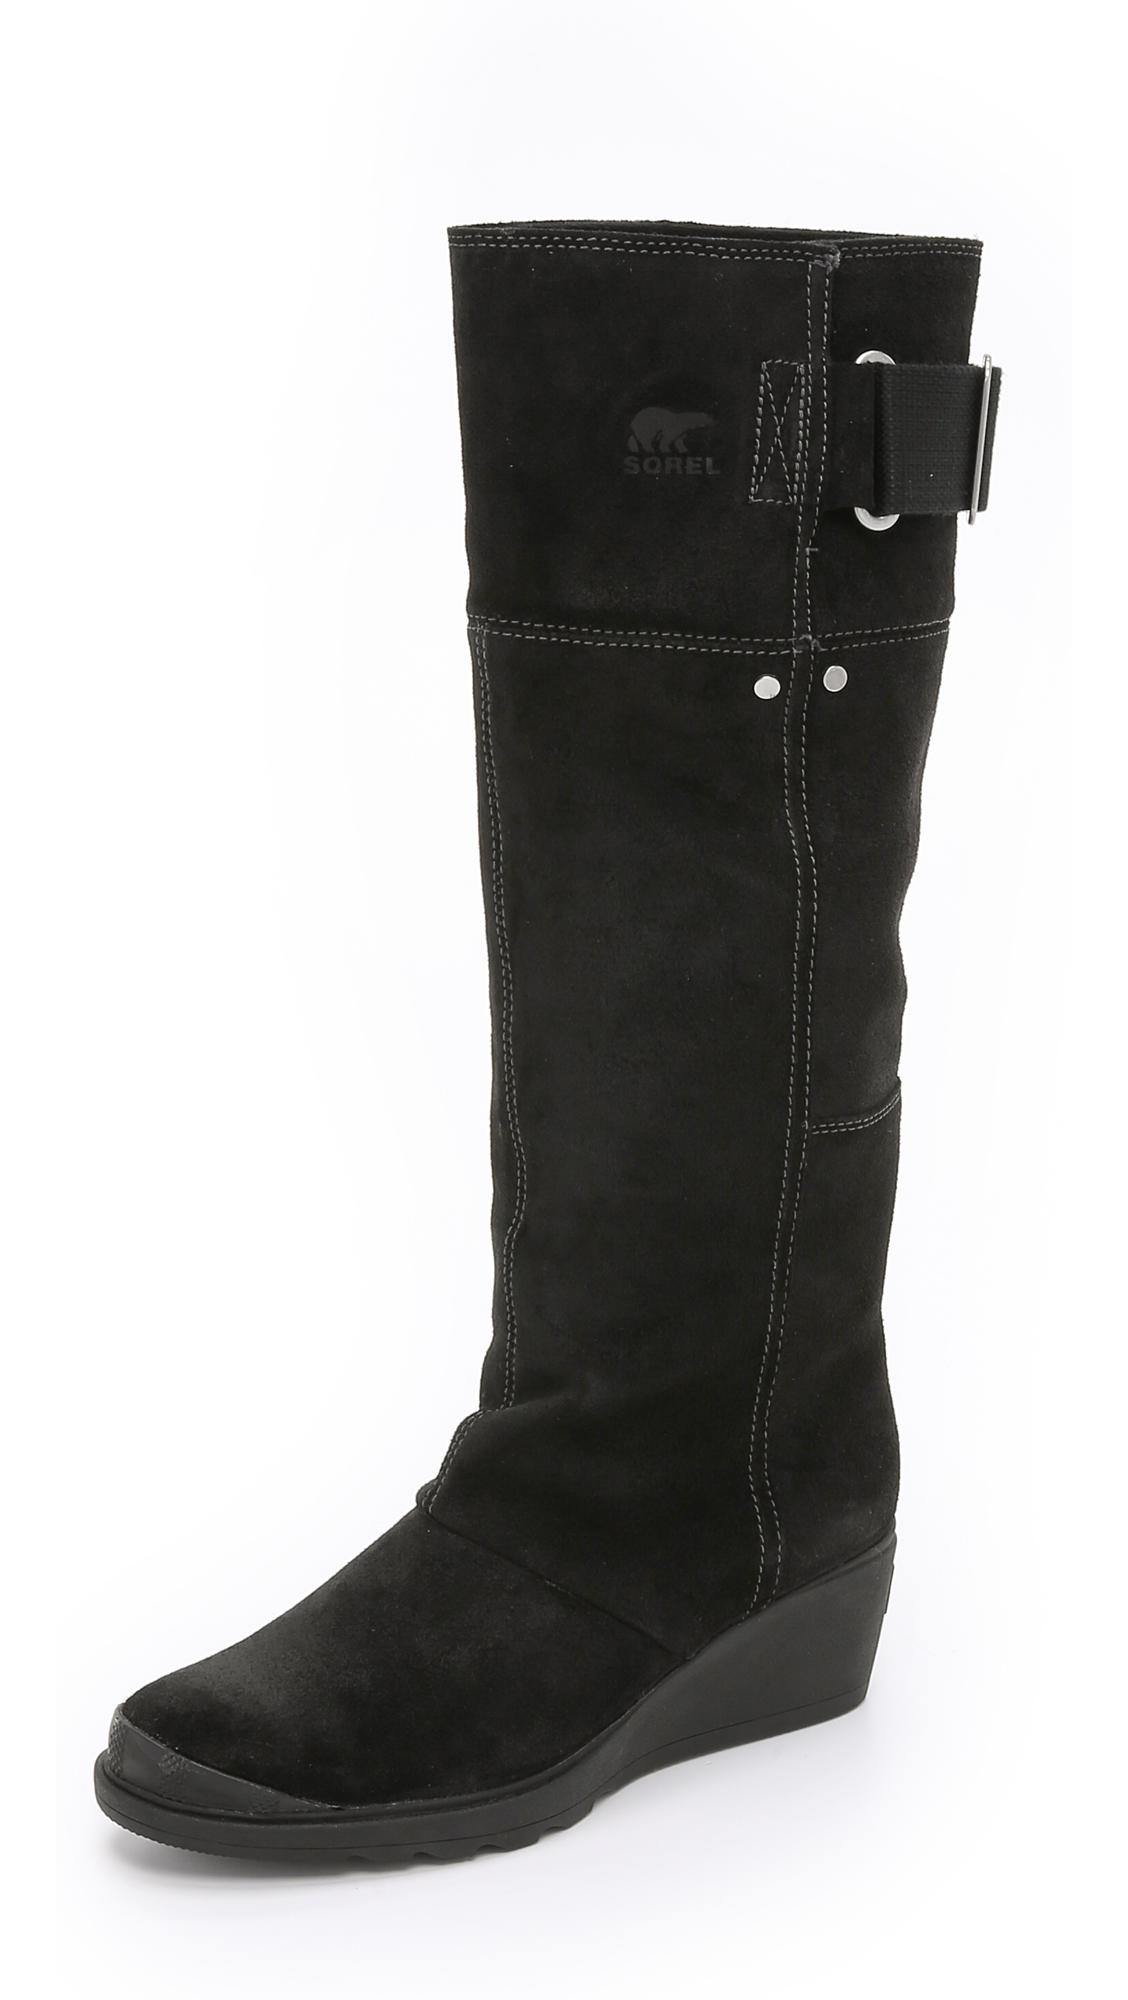 Lyst - Sorel Toronto Tall Boots in Black